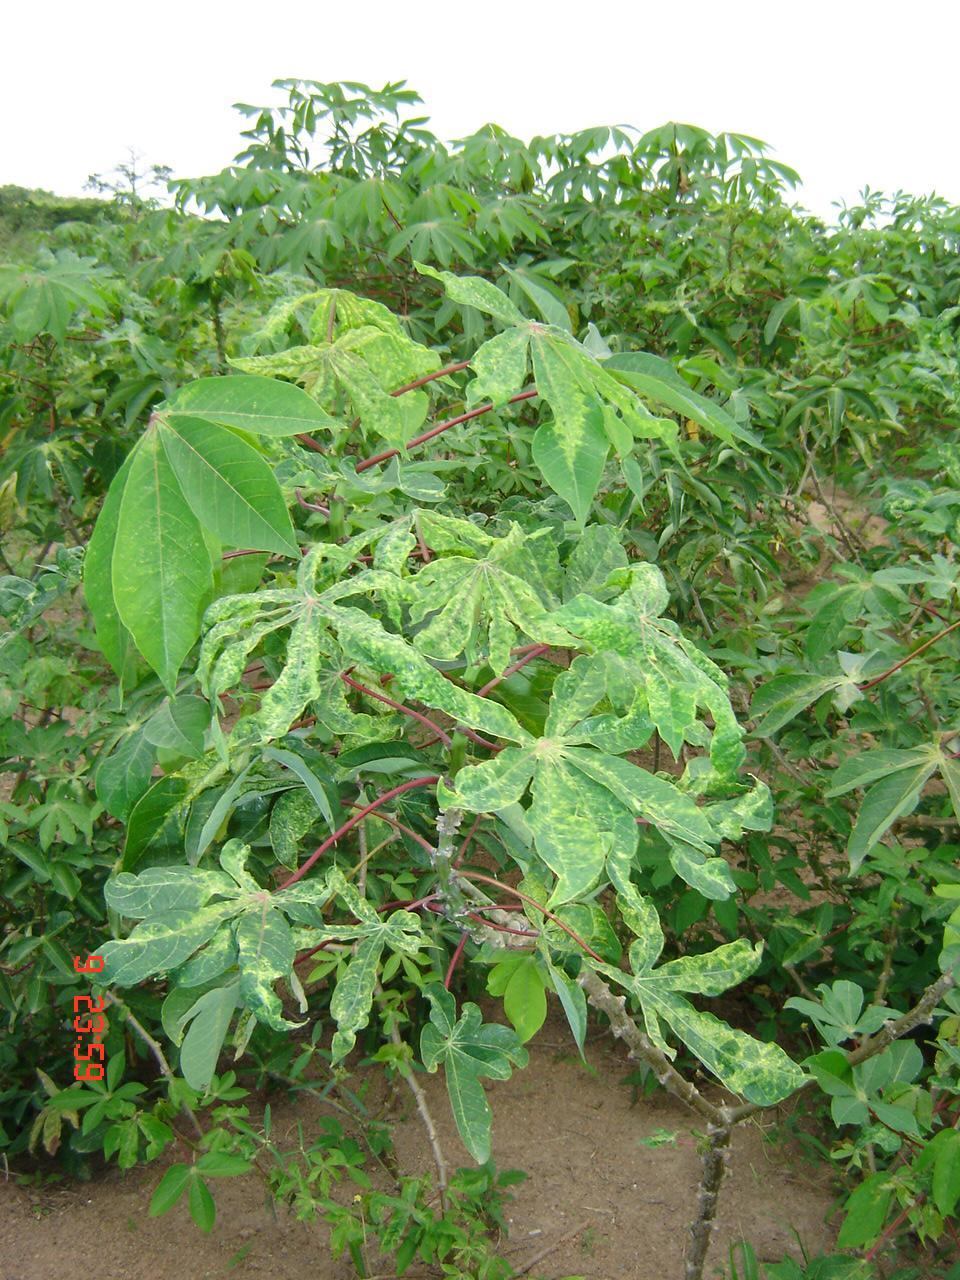 Figure 2. Cassava plant showing the typical leaf mosaic symptom.